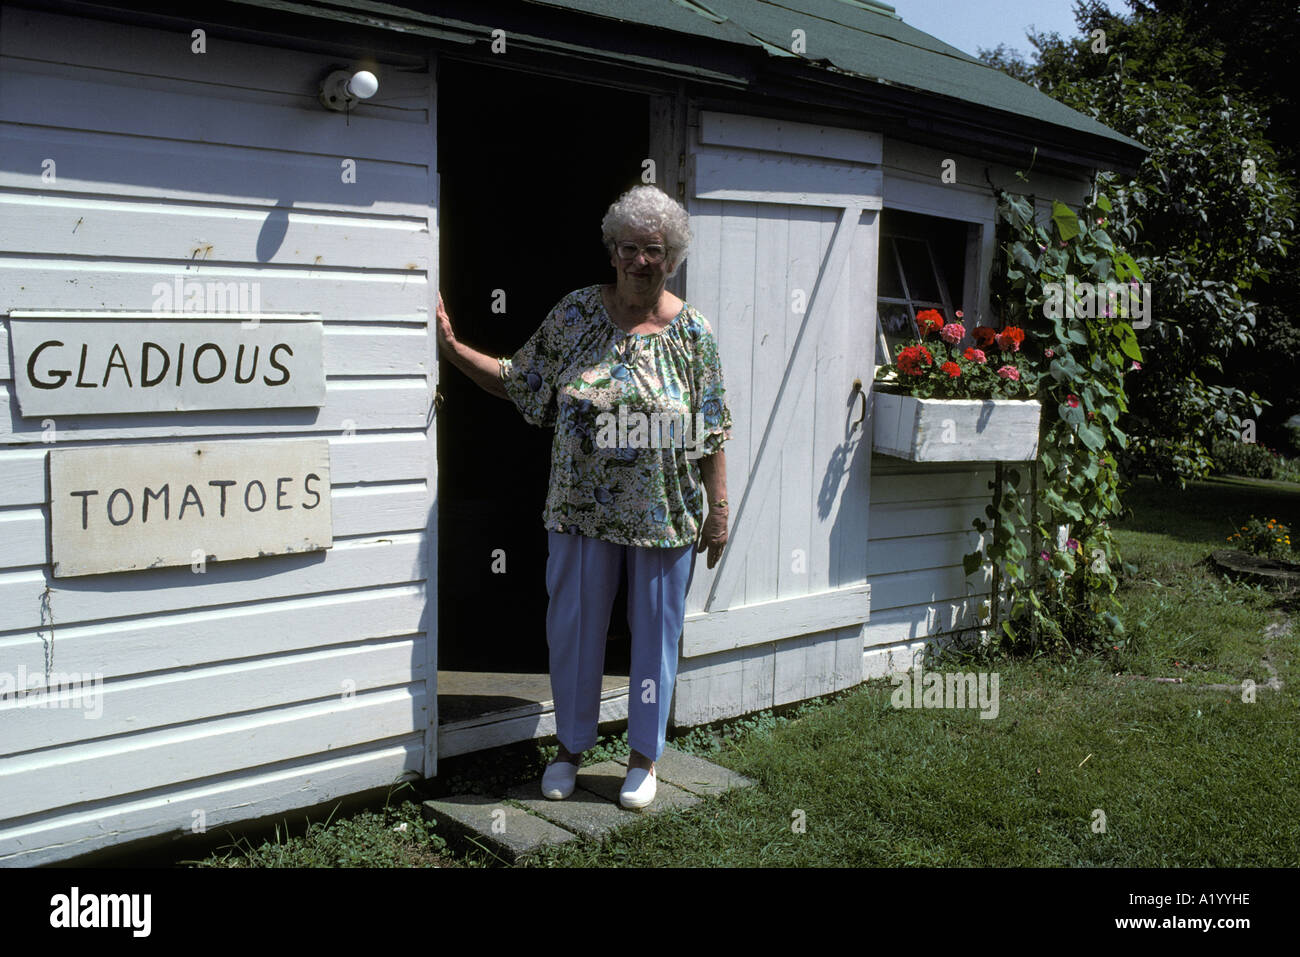 Bäuerin Frau Hausfrau außerhalb am Straßenrand Blume Gemüse stehen Americana-USA Stockfoto